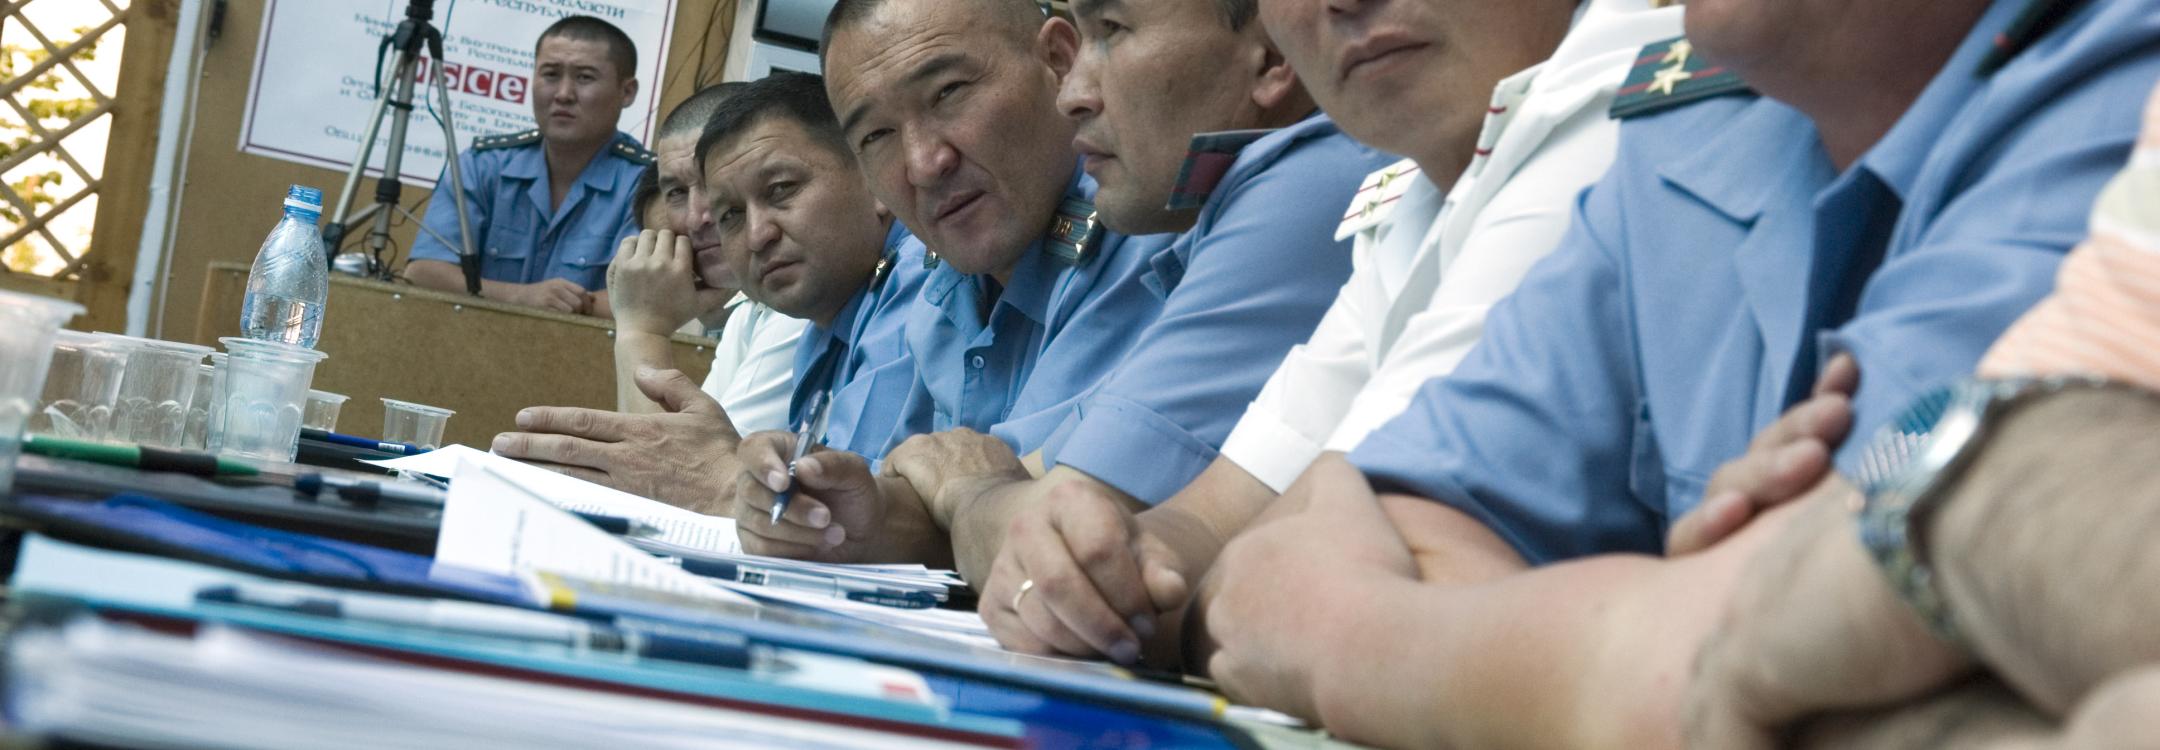 seminar on preventing torture for Kyrgyz police June 2008 photo OSCE_EricGourlan.jpg